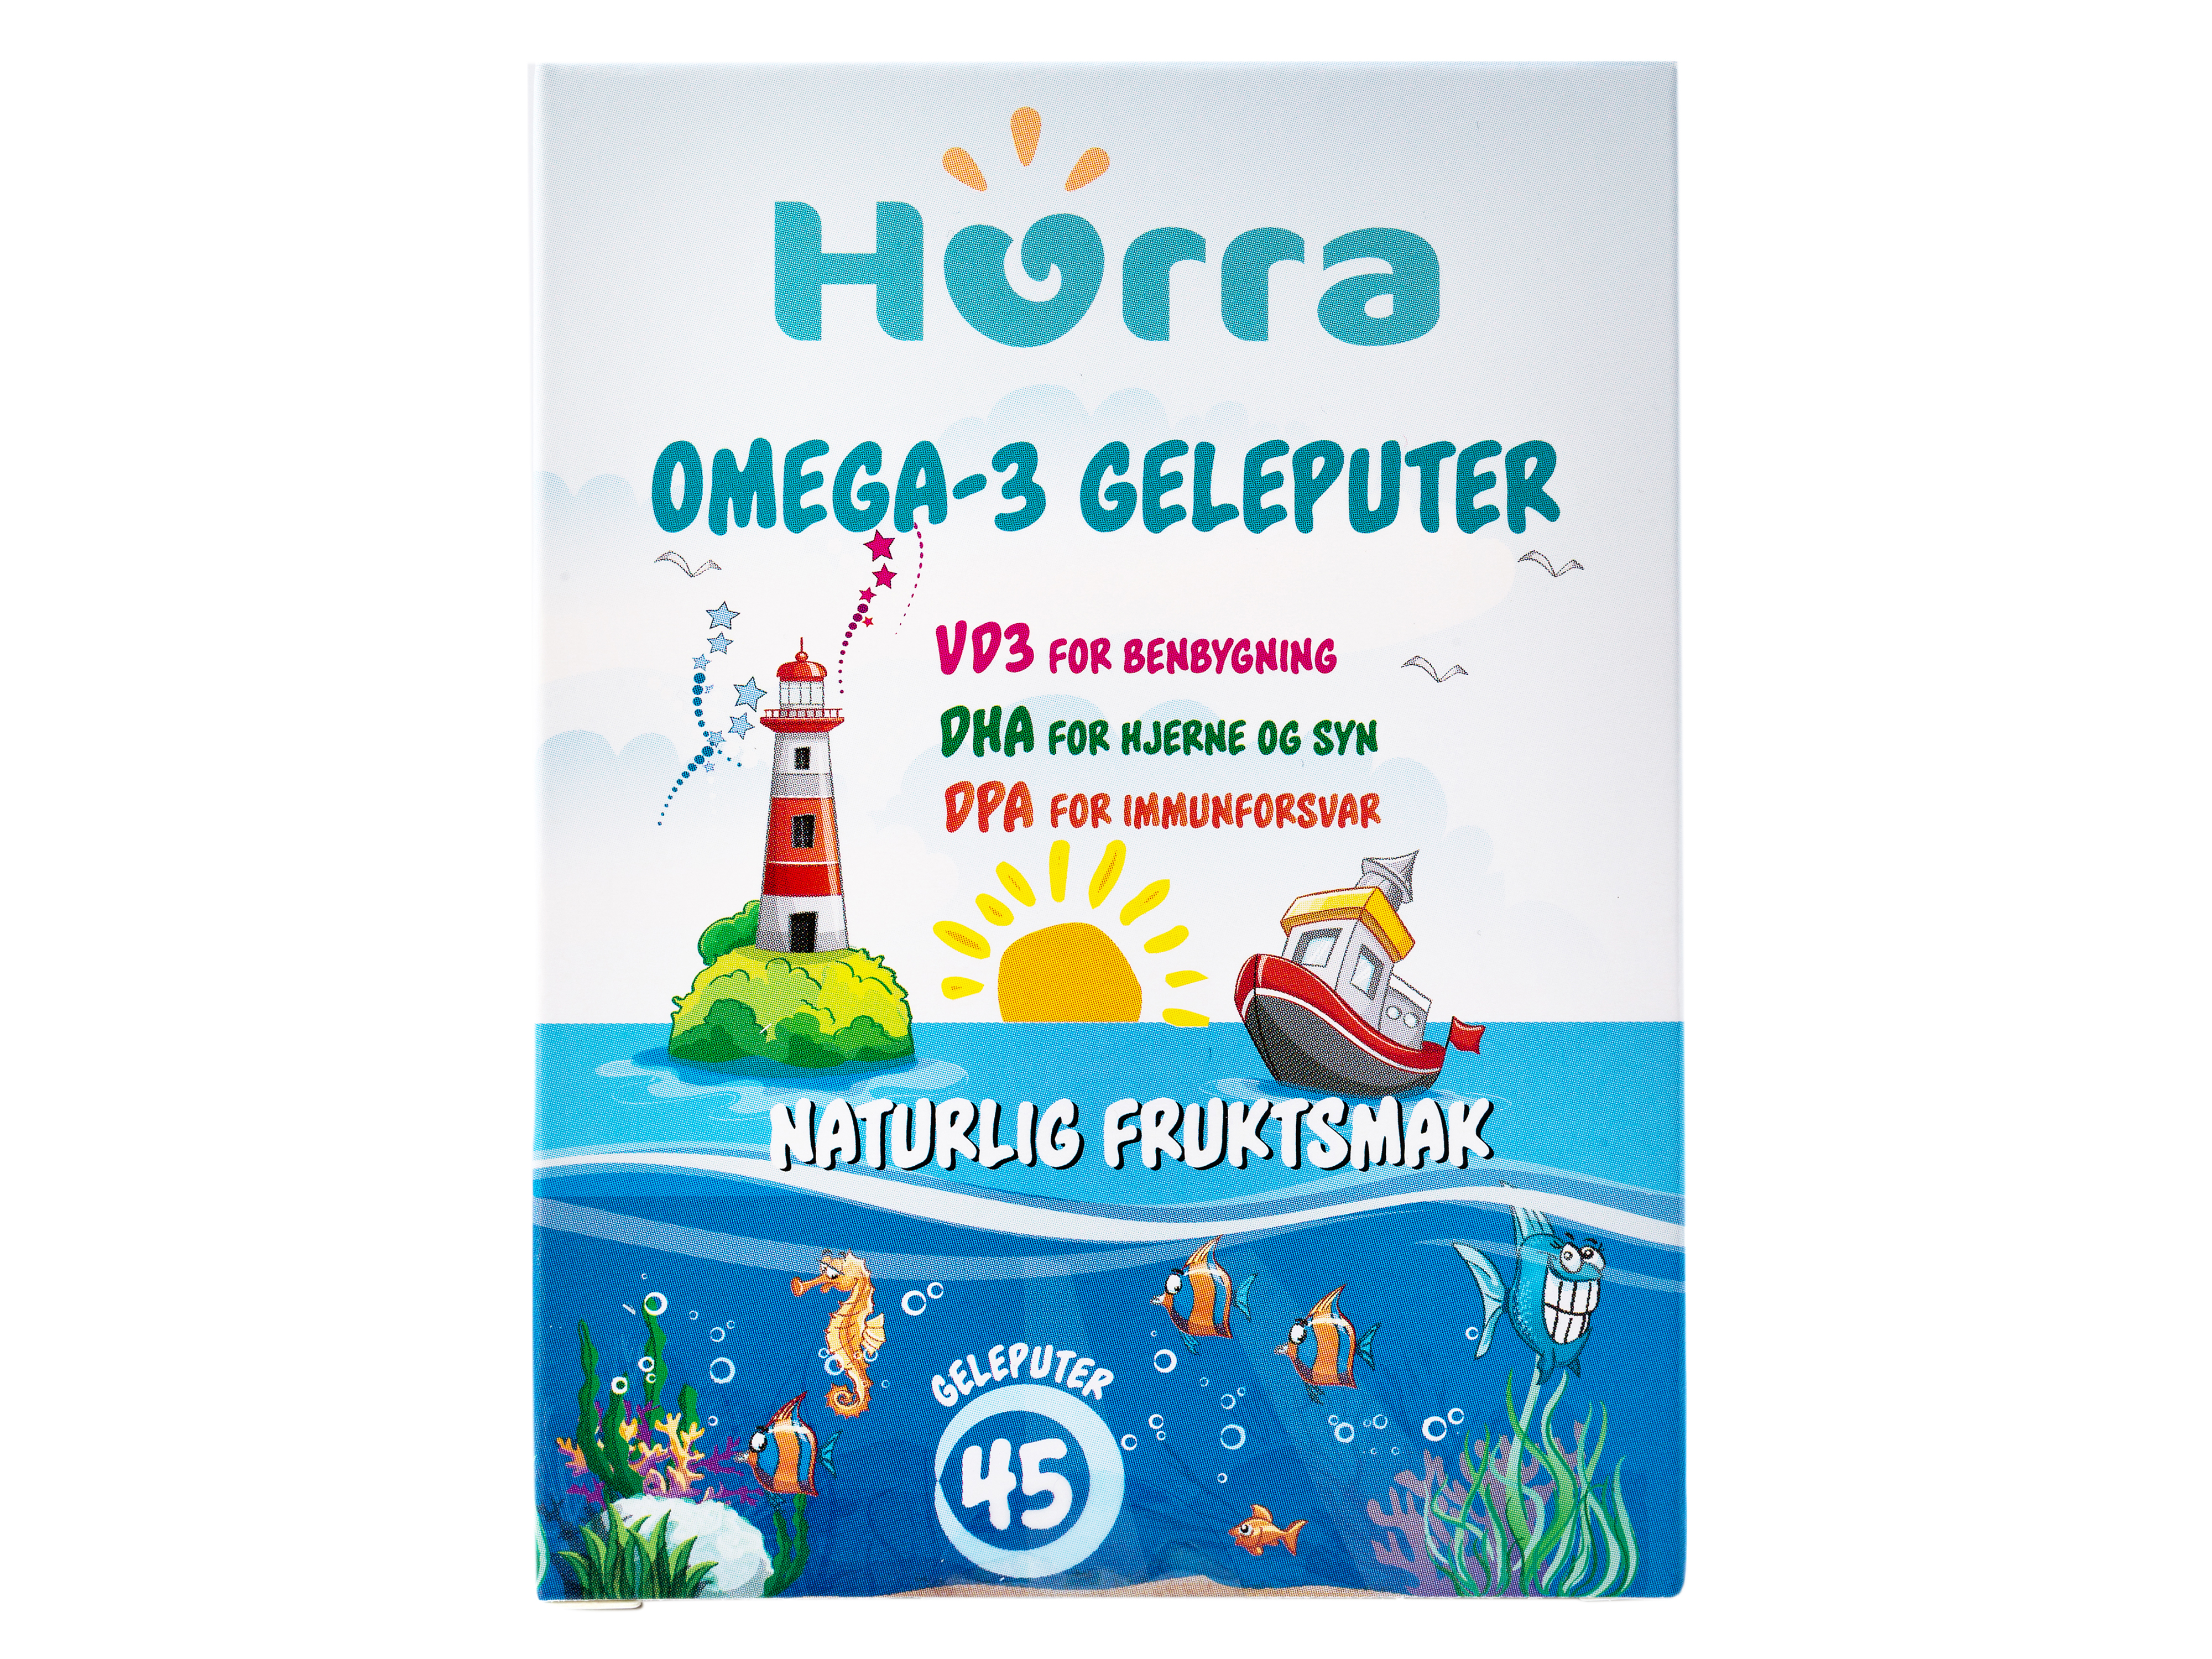 Omega-3 Geleputer, 45 stk